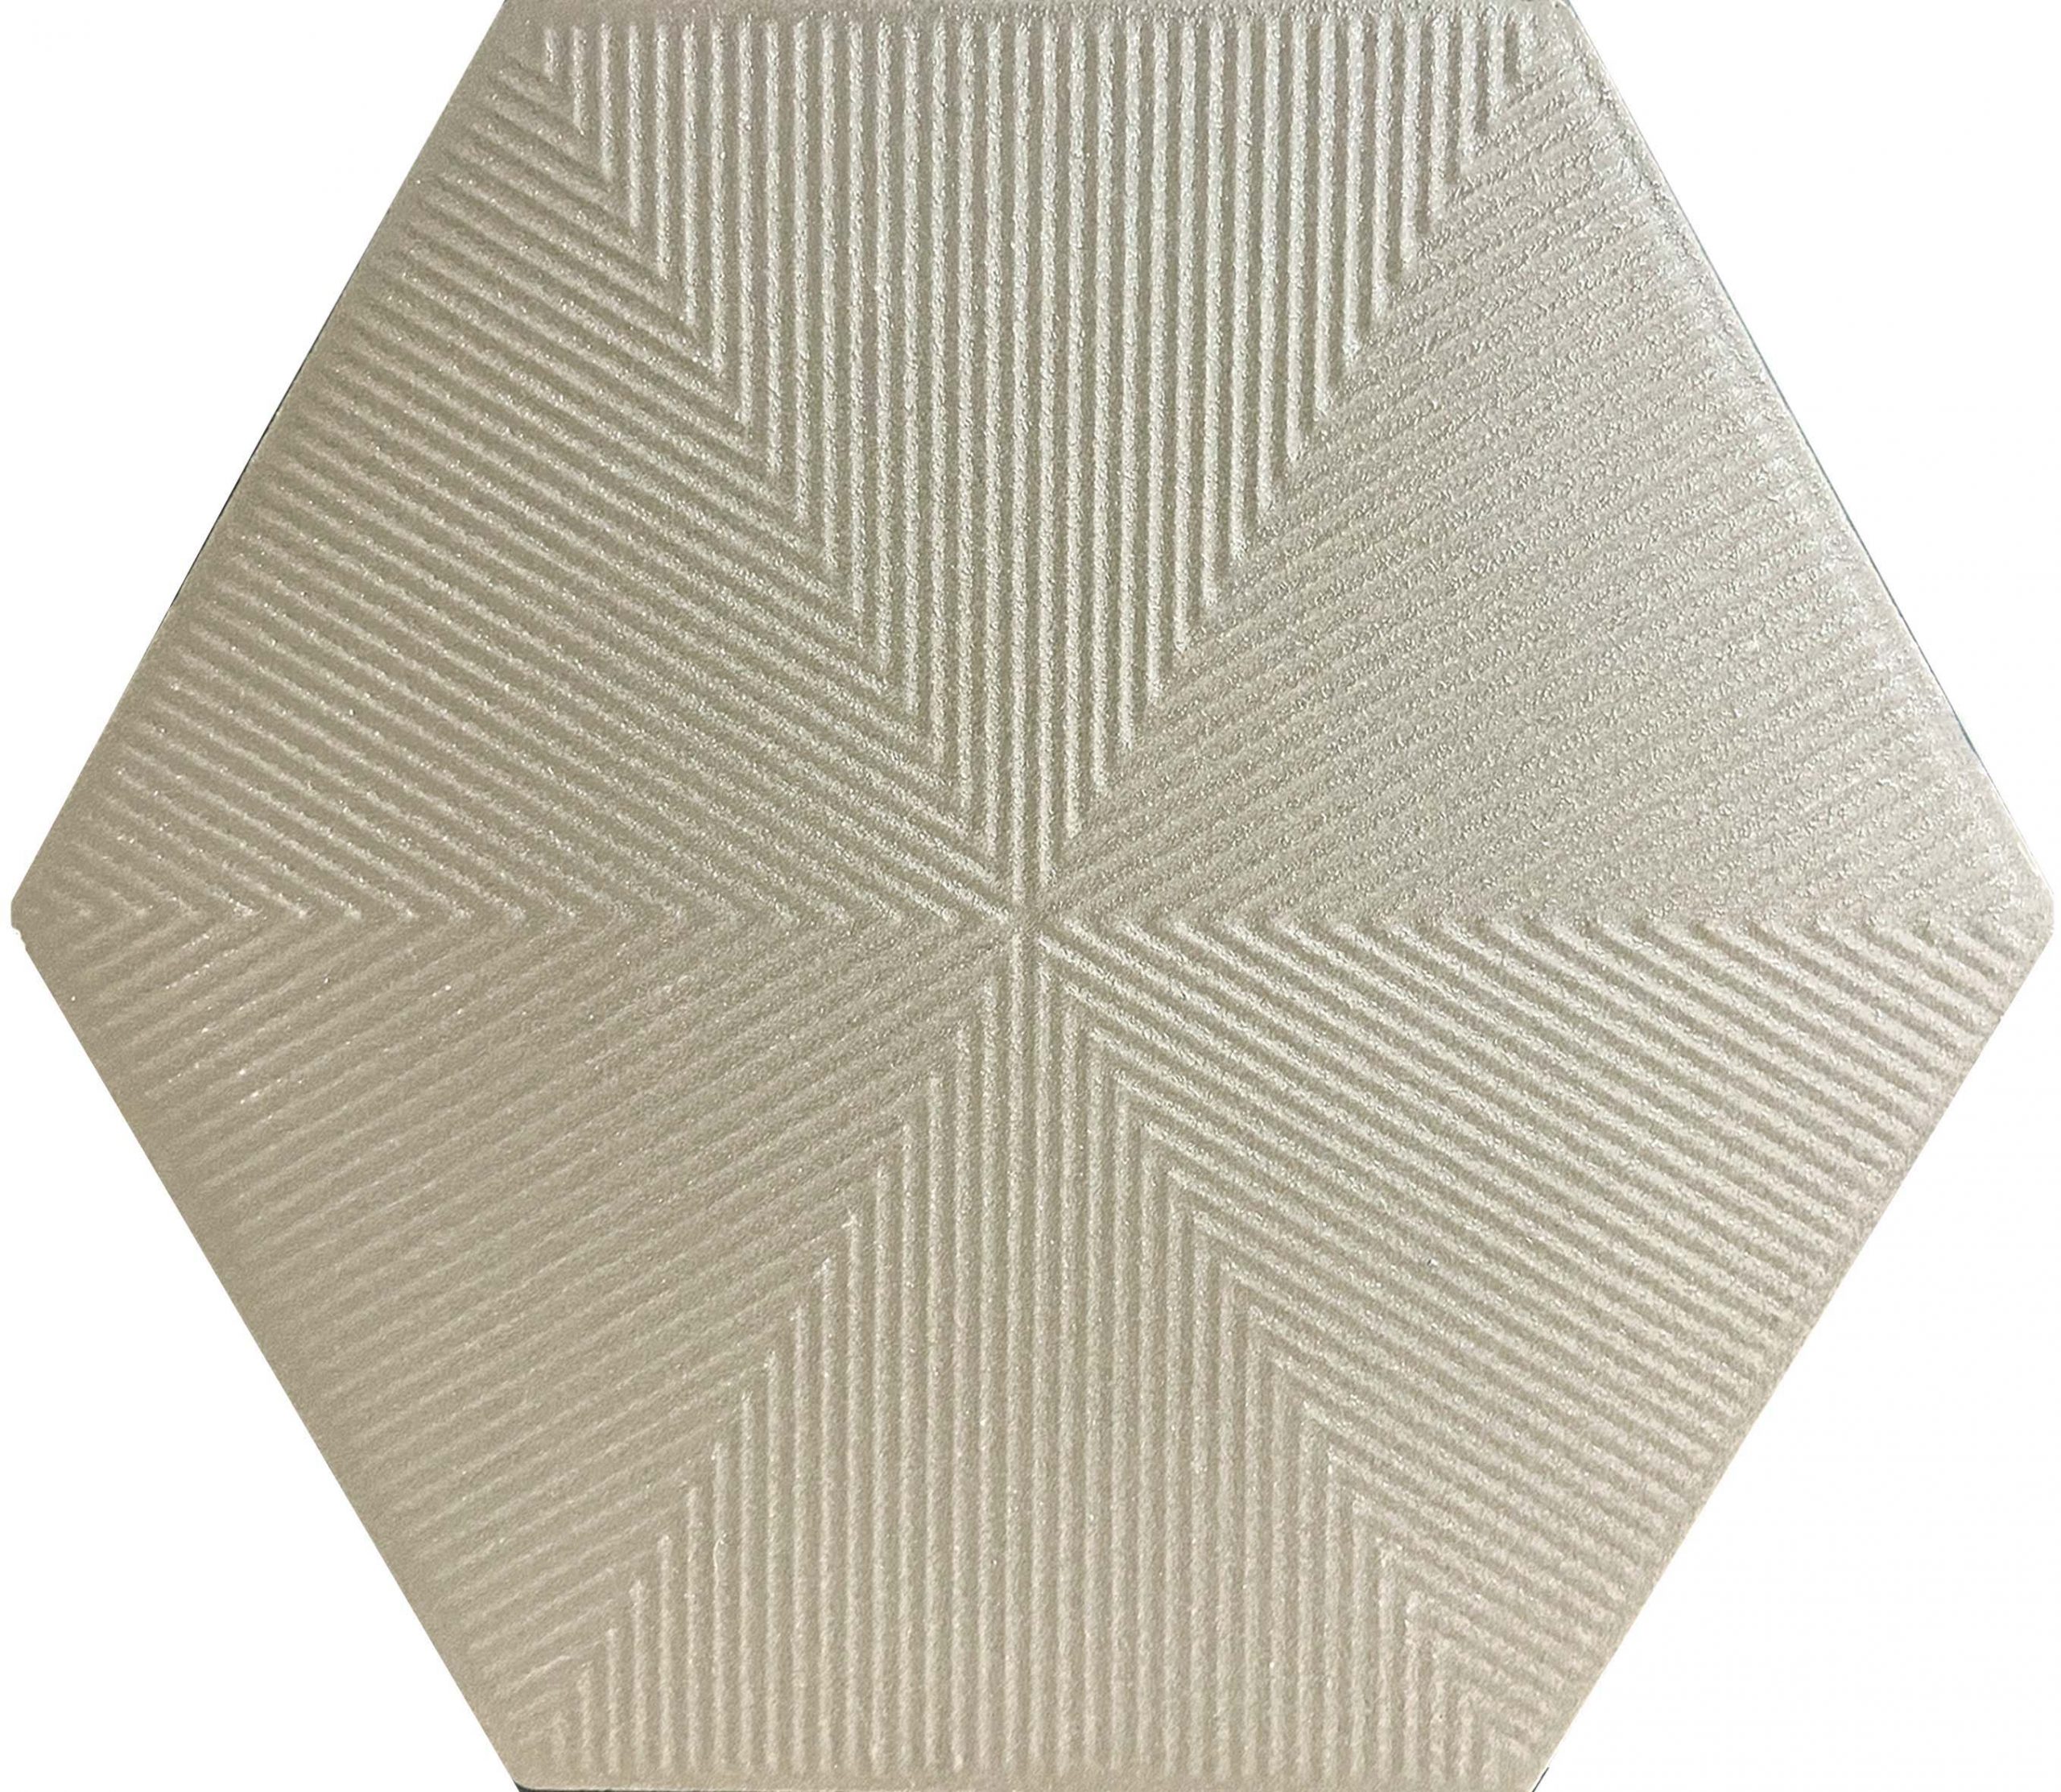 hexagon-linee-sabbia